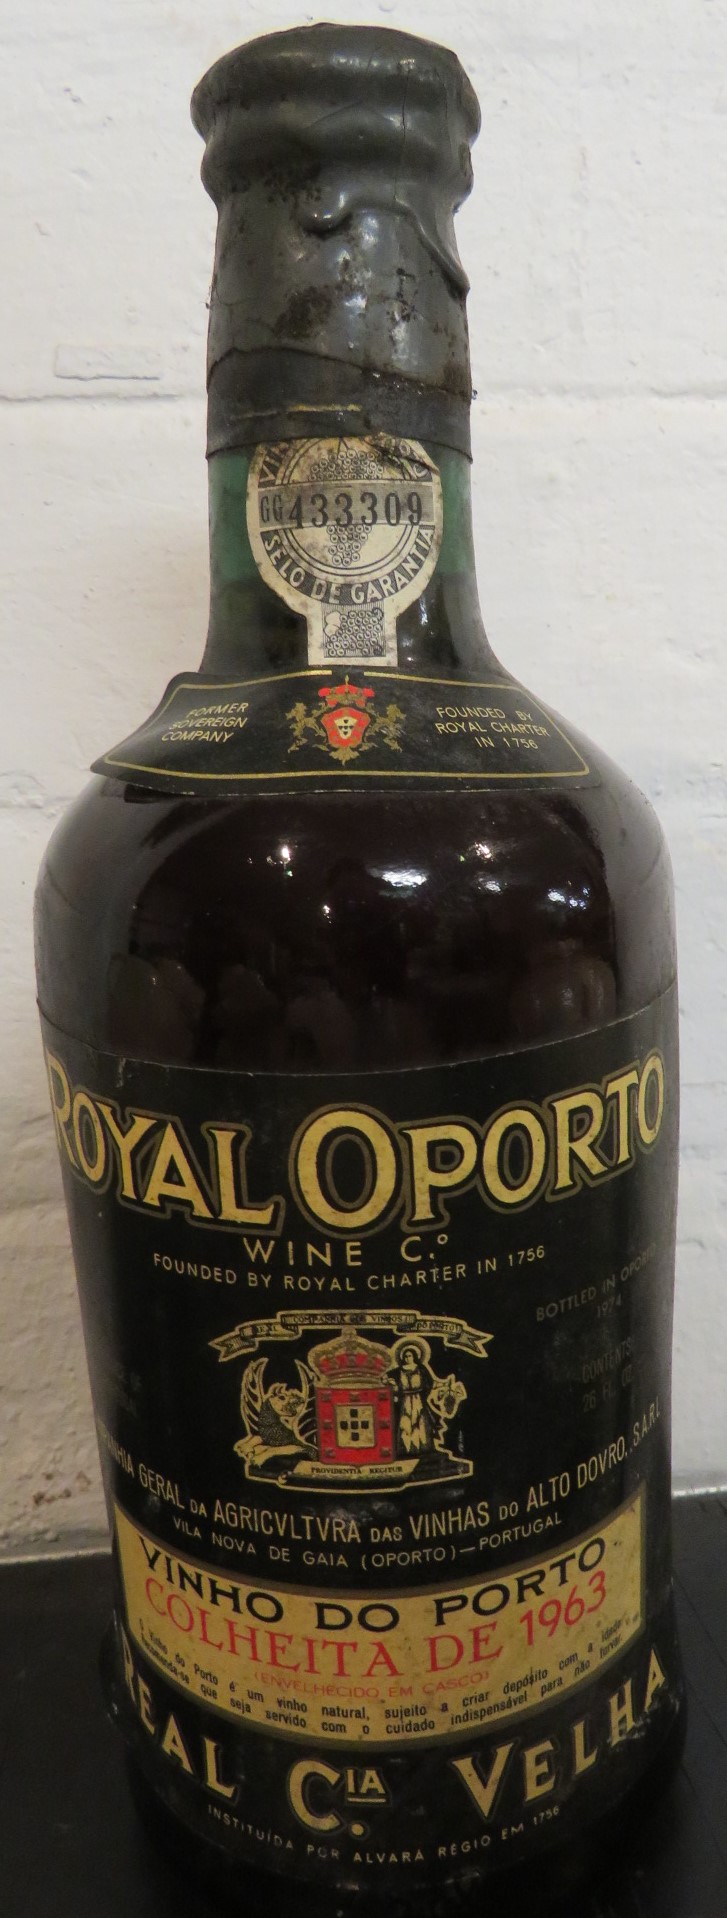 Royal Oporto Wine Co Vinho do Porto Coheita De 1963, bottled in Oporto 1974, 26 Fl. Oz, labelled